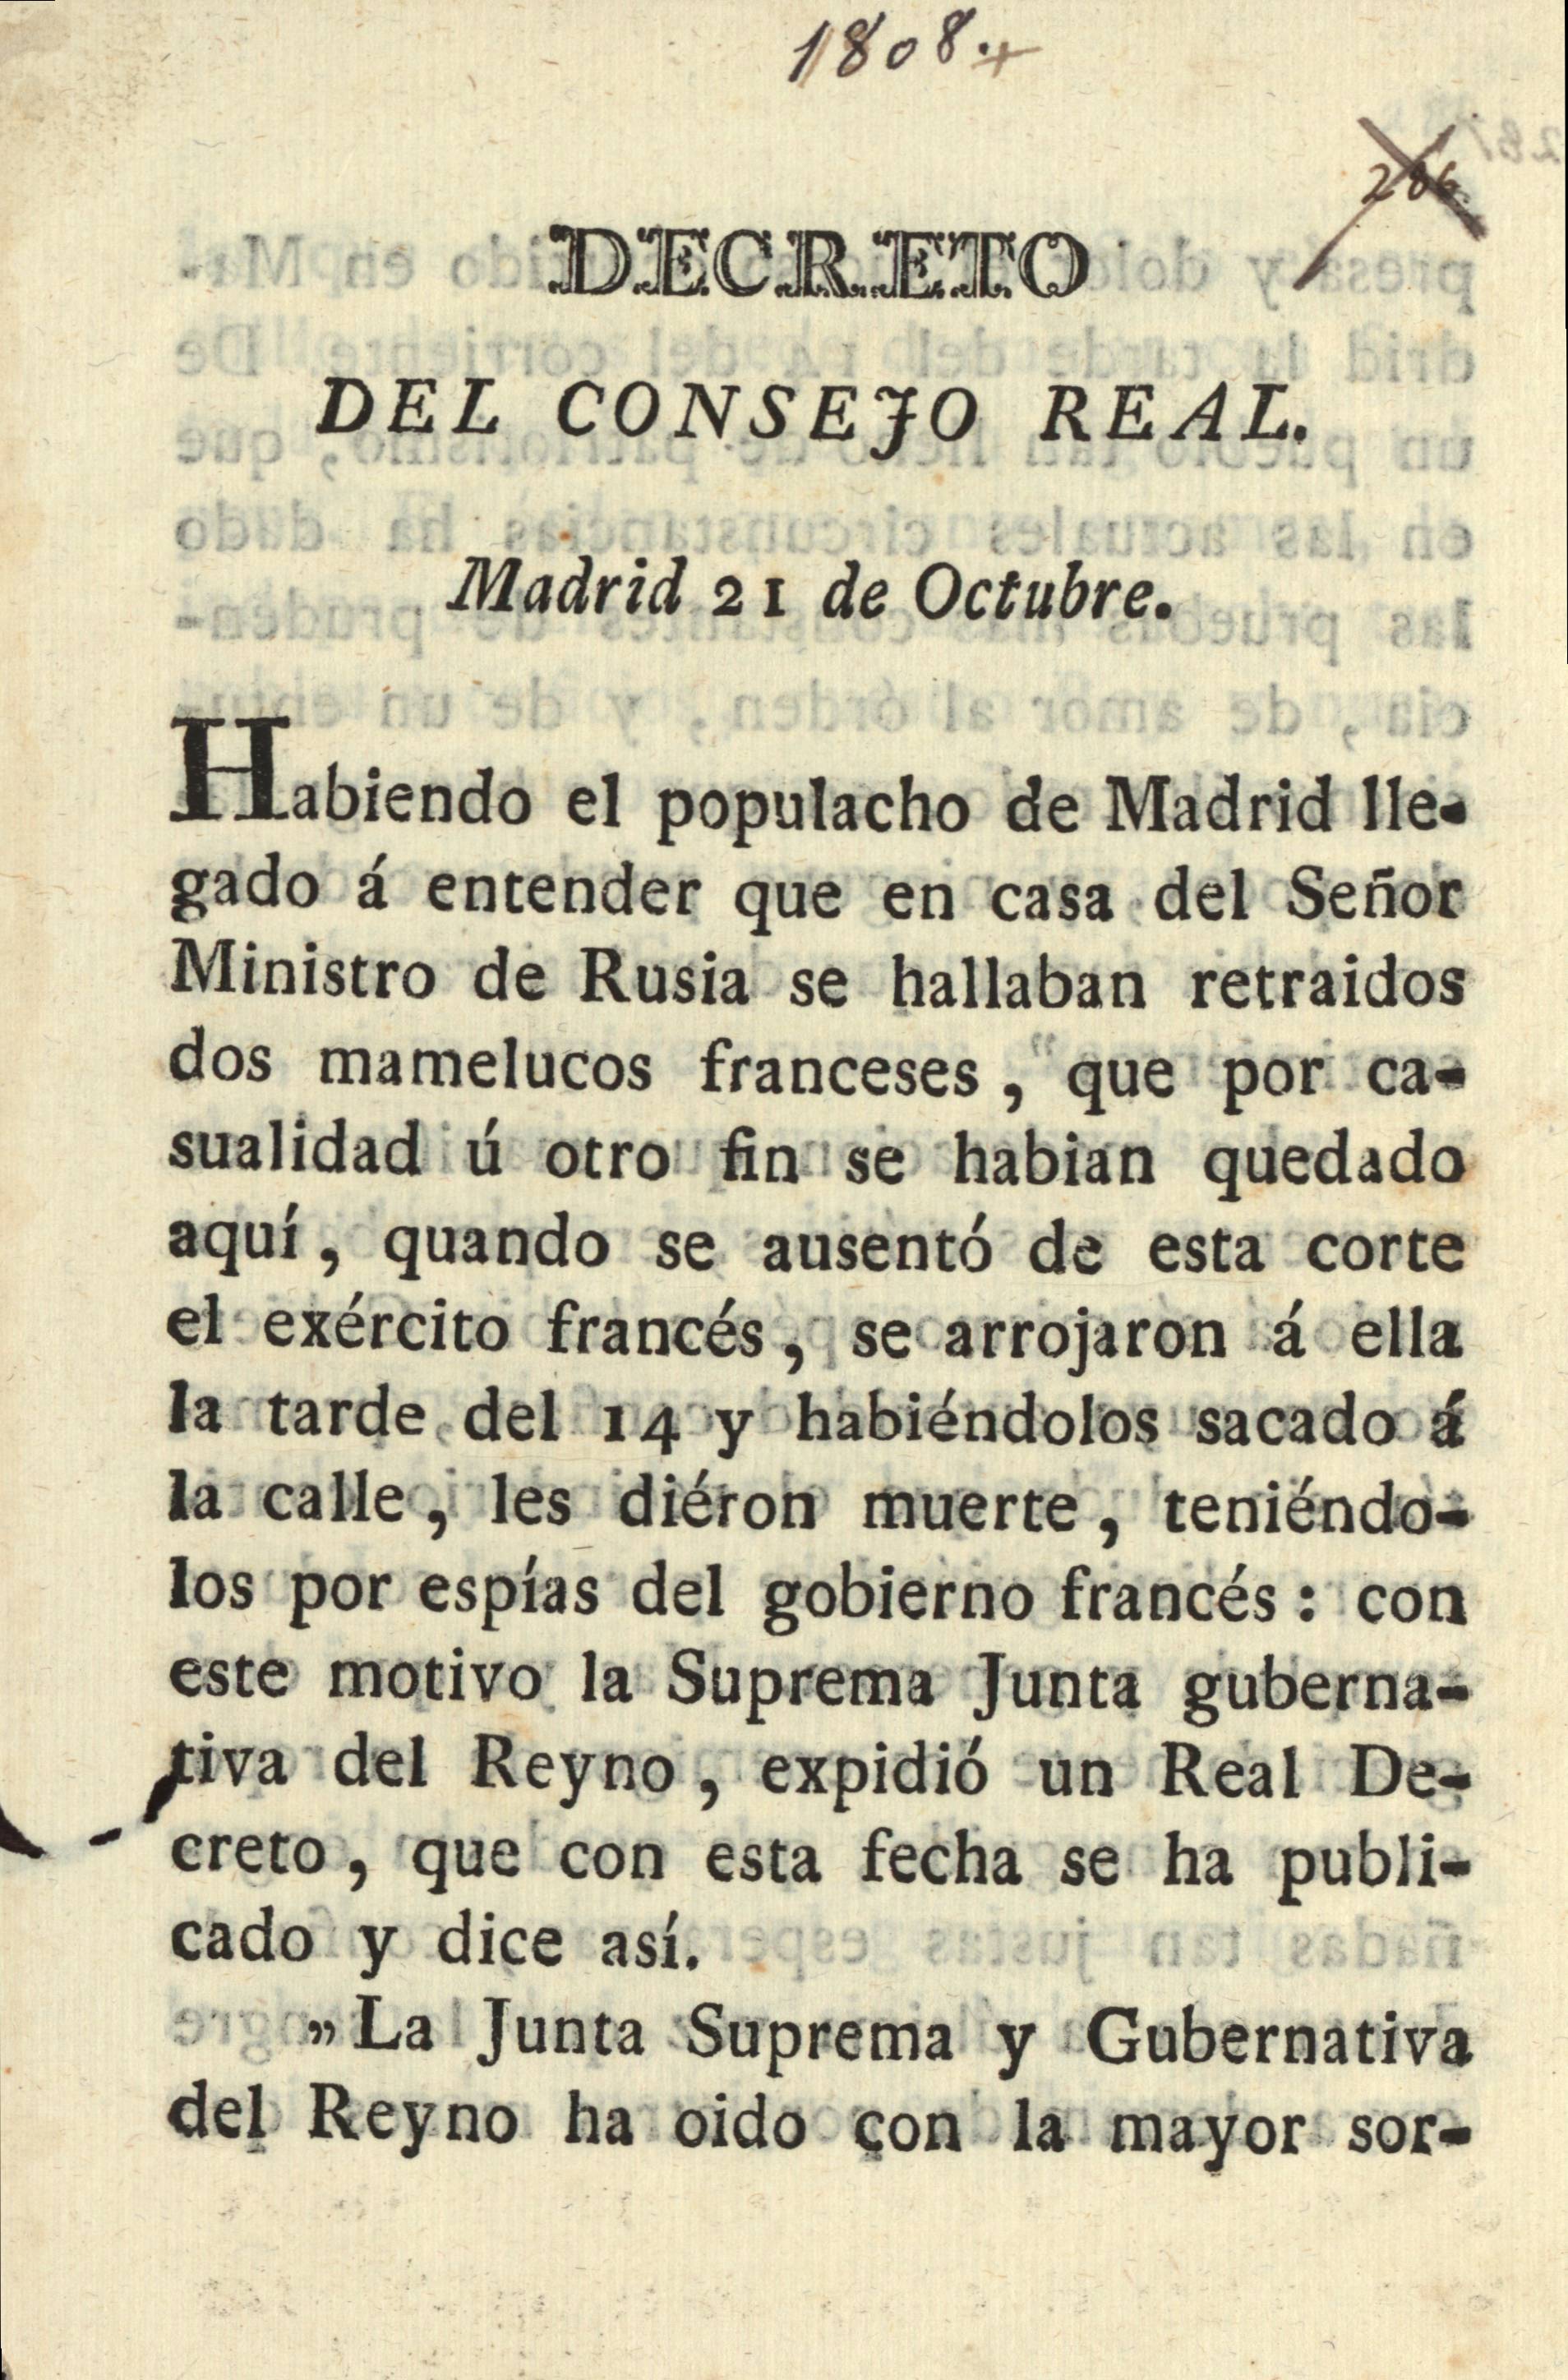 Decreto del Consejo Real. Madrid 21 de Octubre